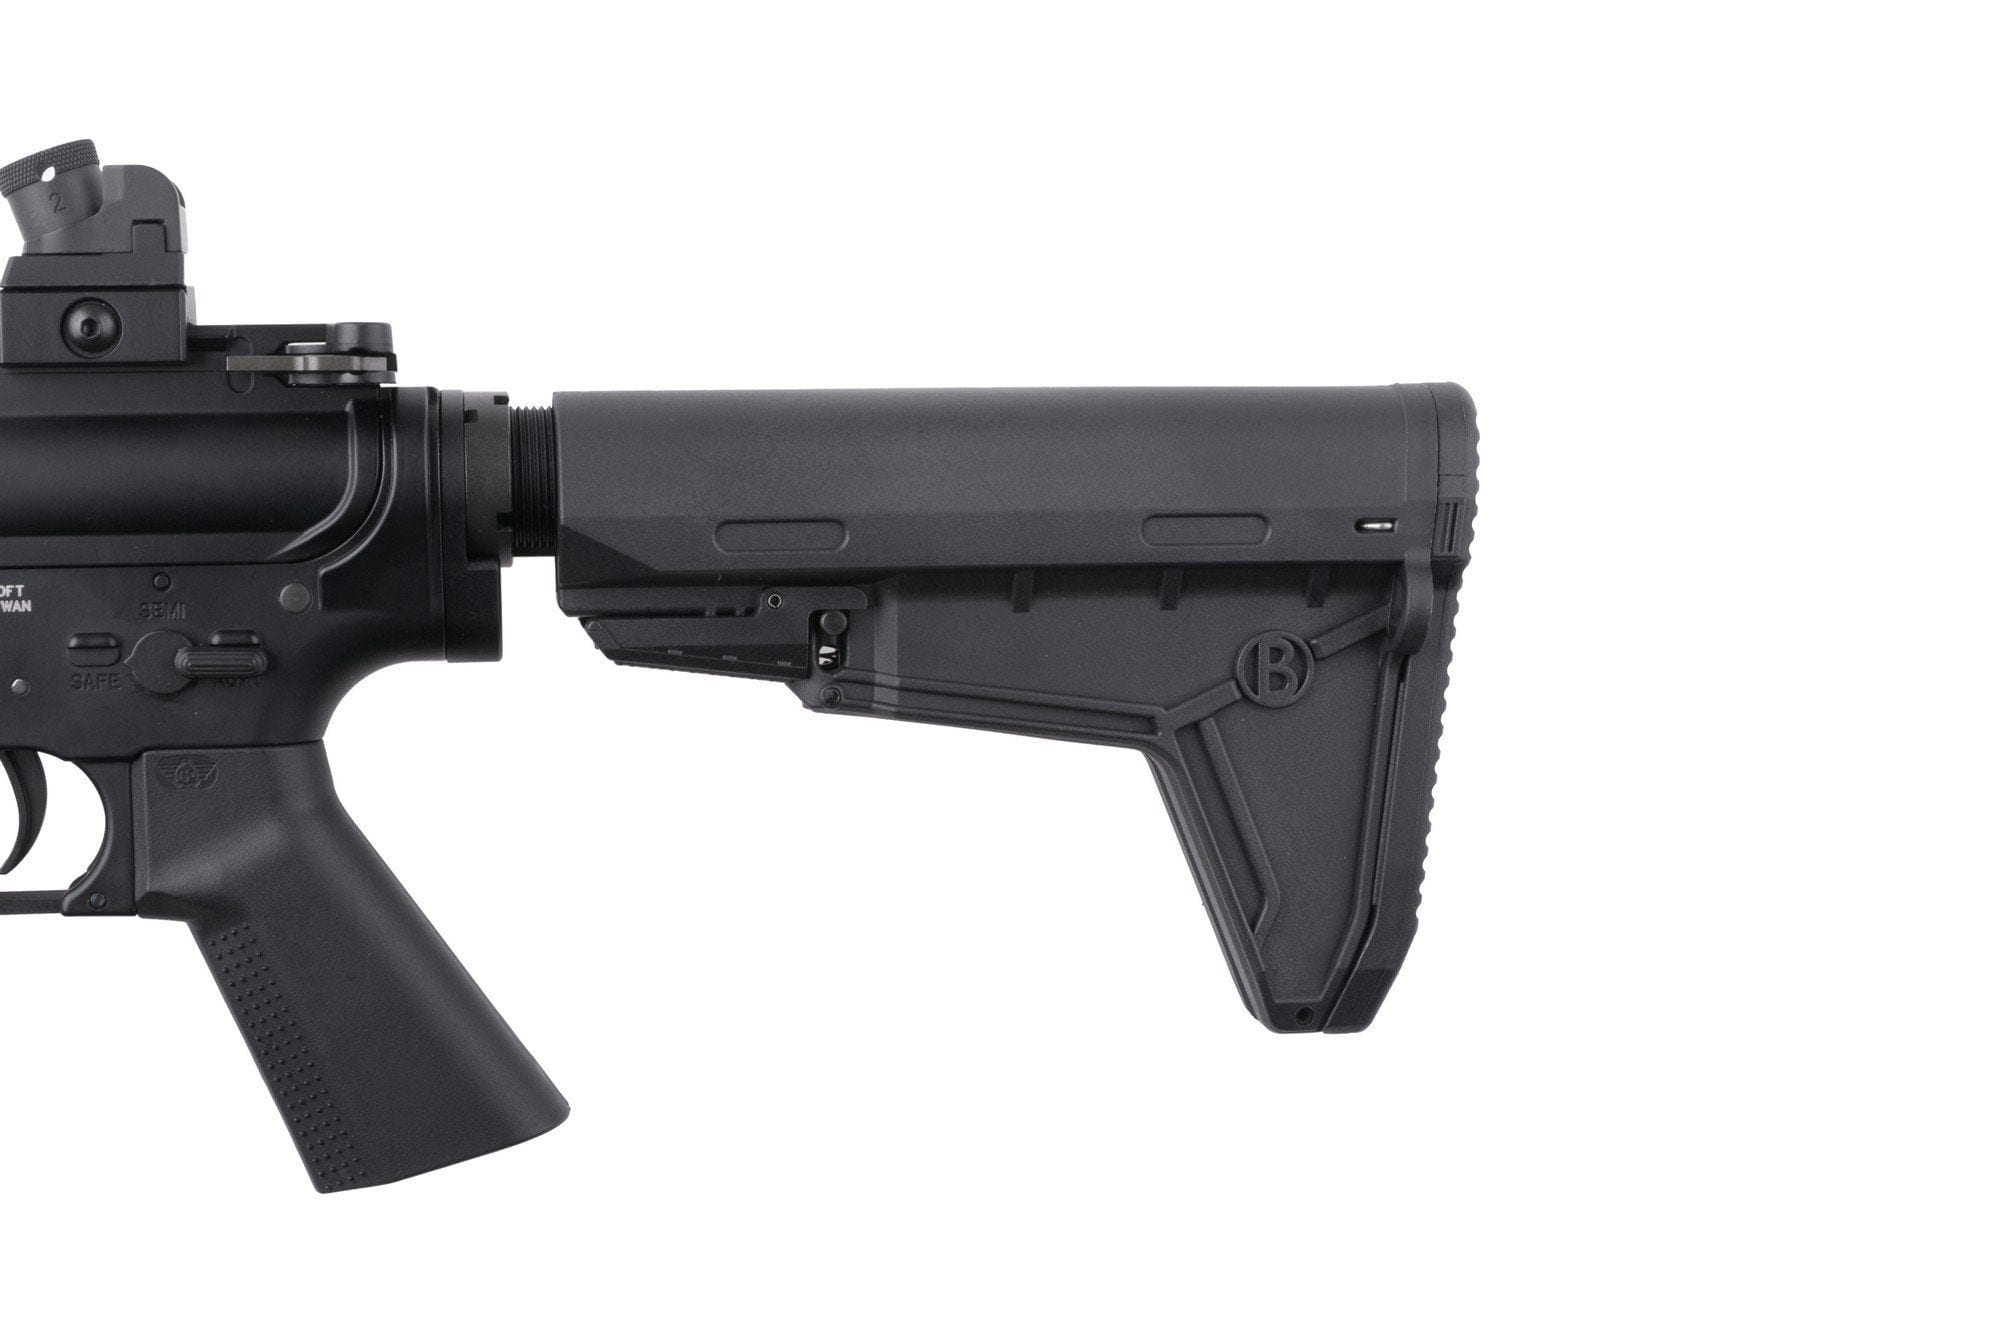 COBRA KEYMOD (B.R.S.S.) Carbine Replica - Black by BOLT on Airsoft Mania Europe